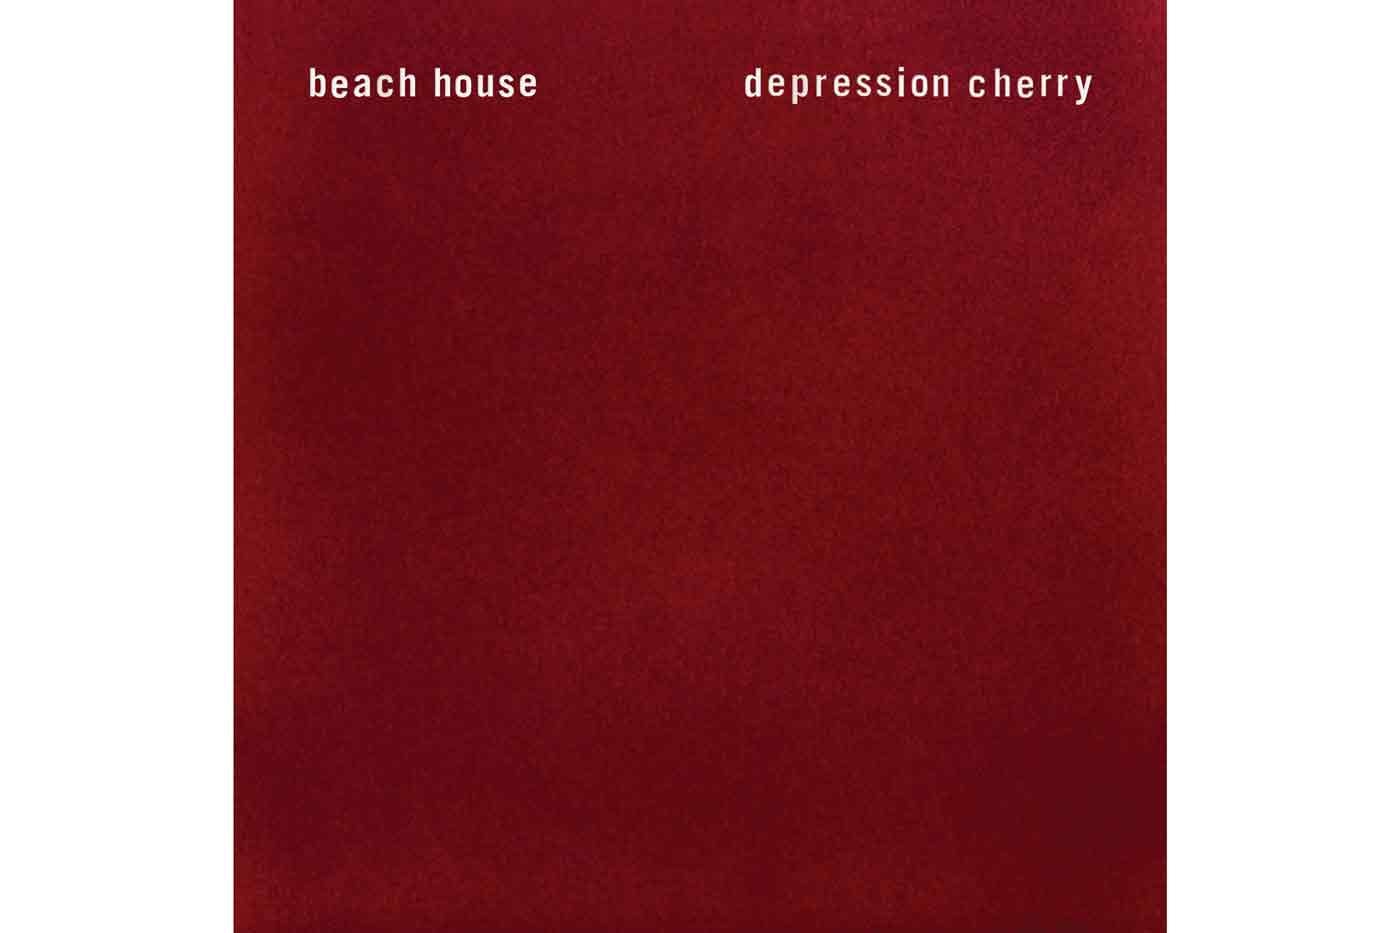 Beach House - Depression Cherry (Album Stream)